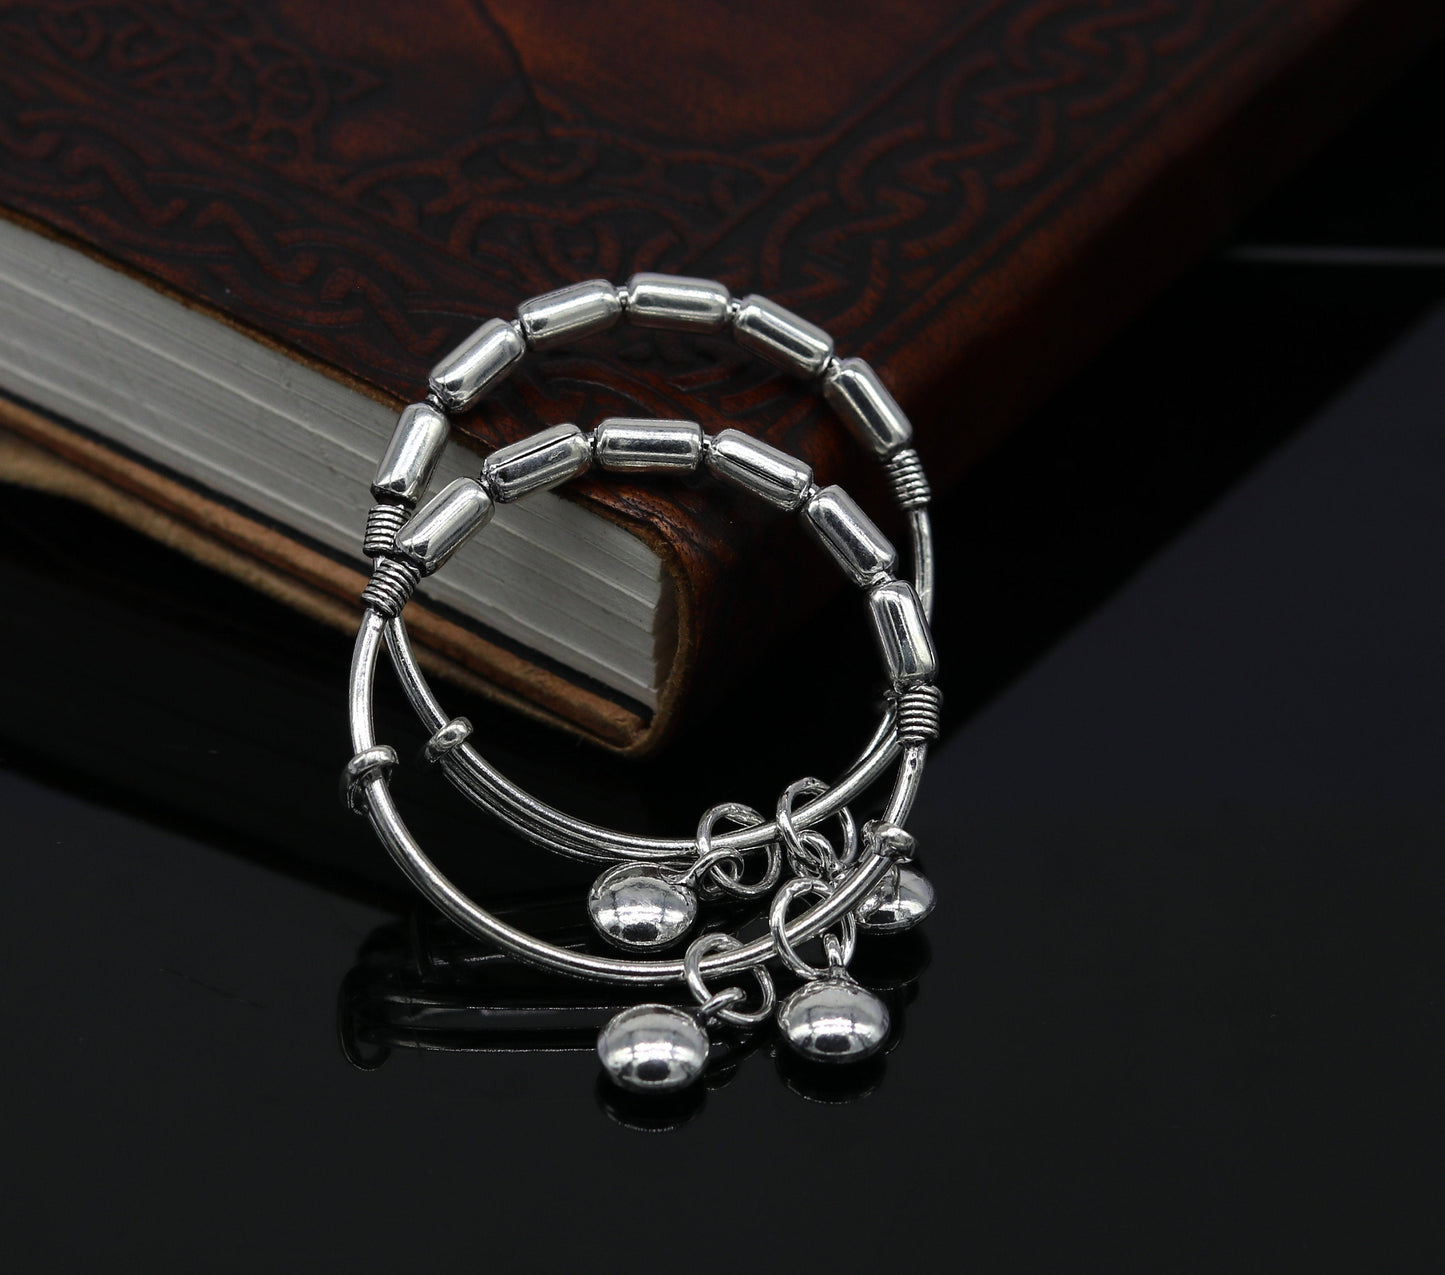 Exclusive 925 sterling silver handmade adjustable baby bangle kada bracelet, fabulous heart shape hangings charm bangles unisex kids bbk72 - TRIBAL ORNAMENTS